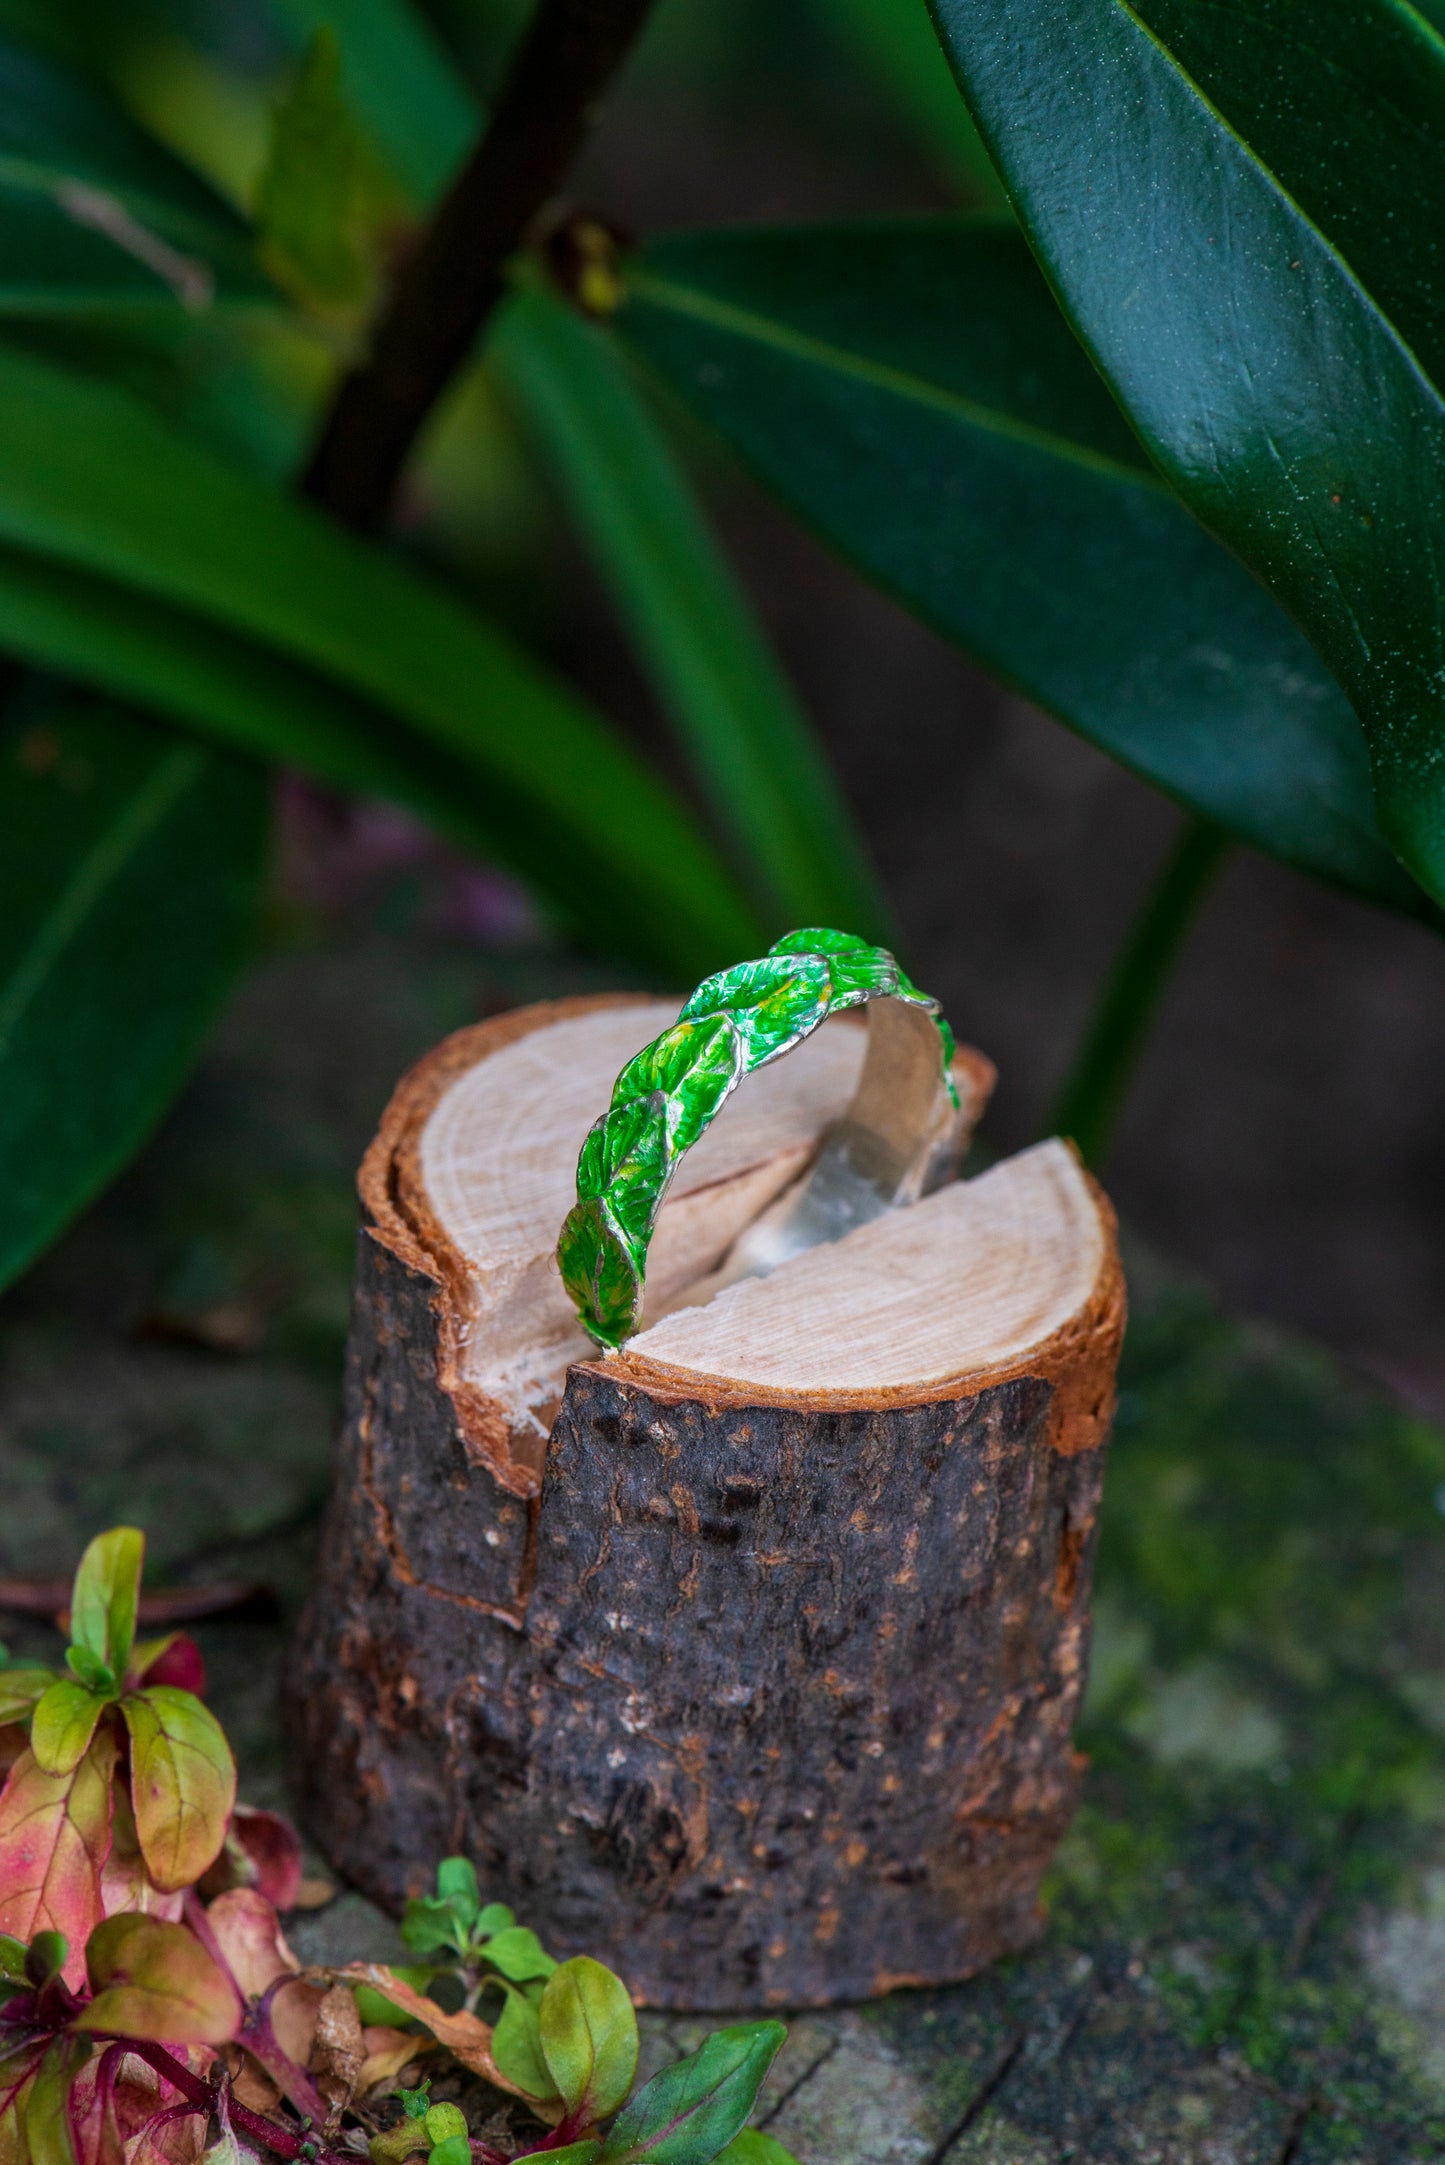 Leaf Band Ring